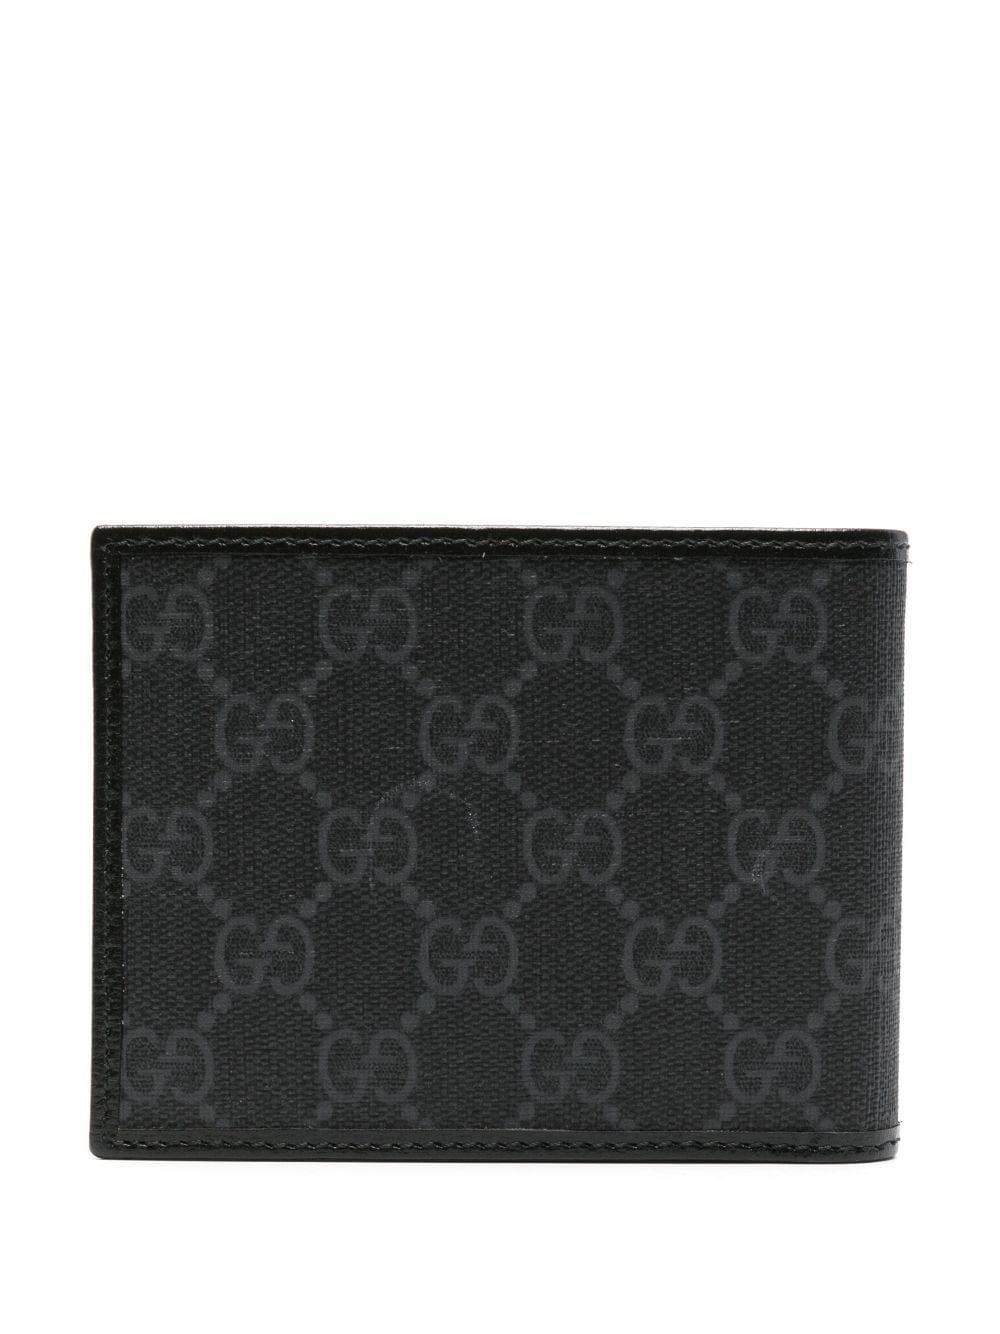 Gucci GG Supreme canvas wallet - Black